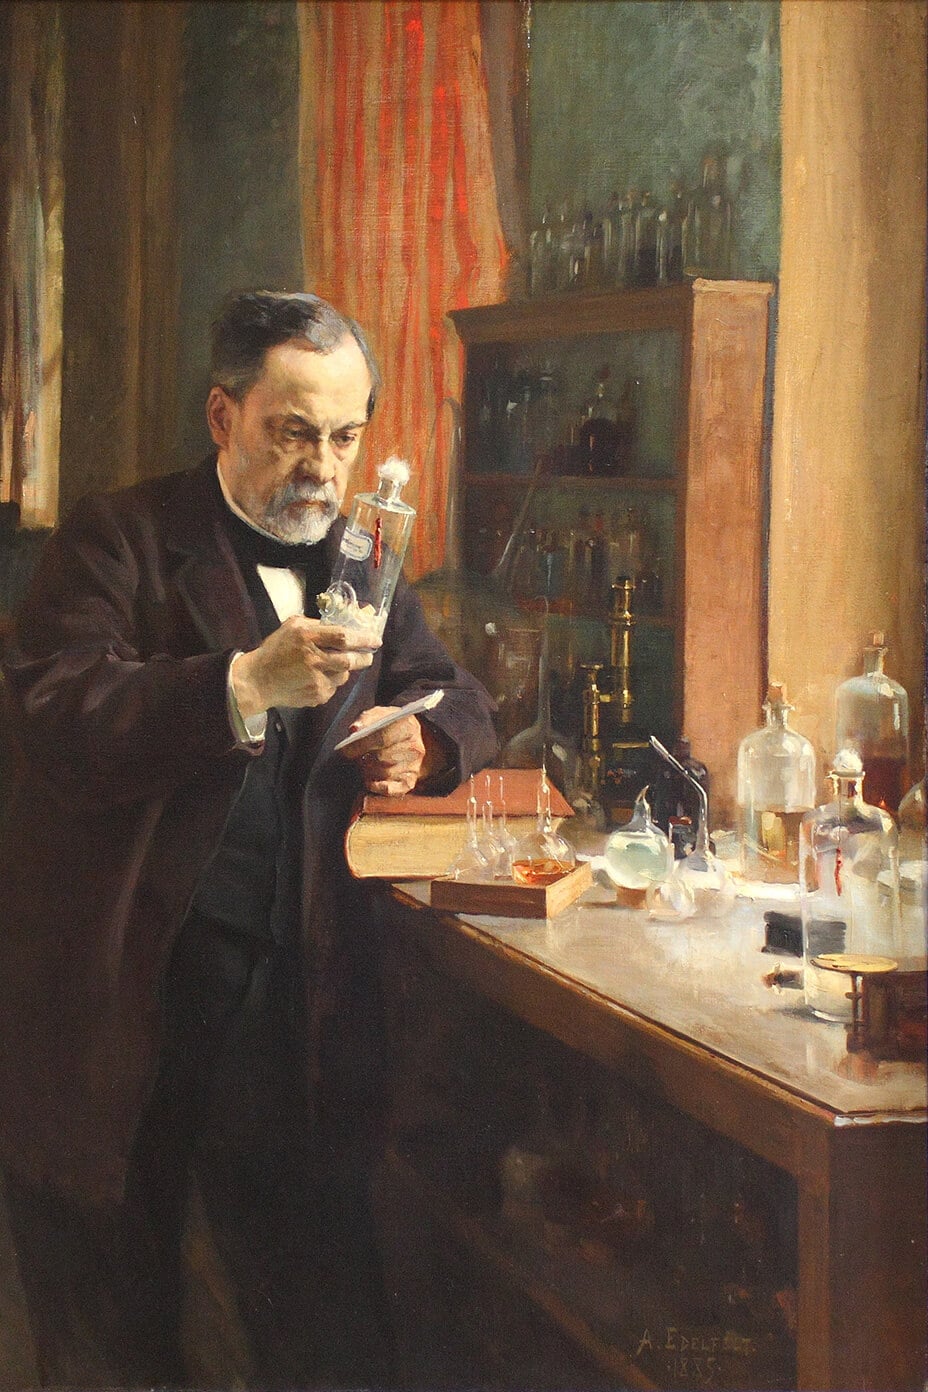 Dr. Louis Pasteur in his lab holding a bottle